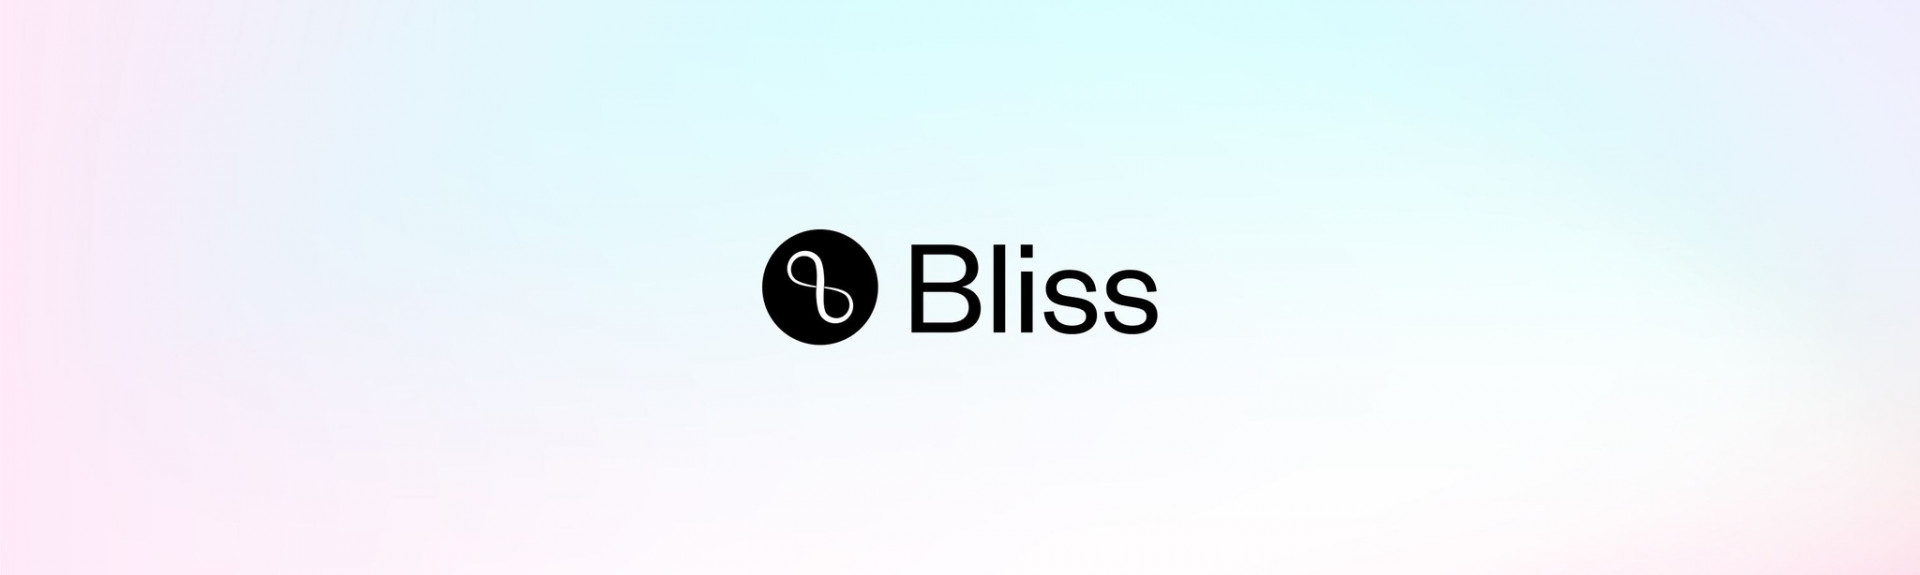 Bliss - Visual Breathing